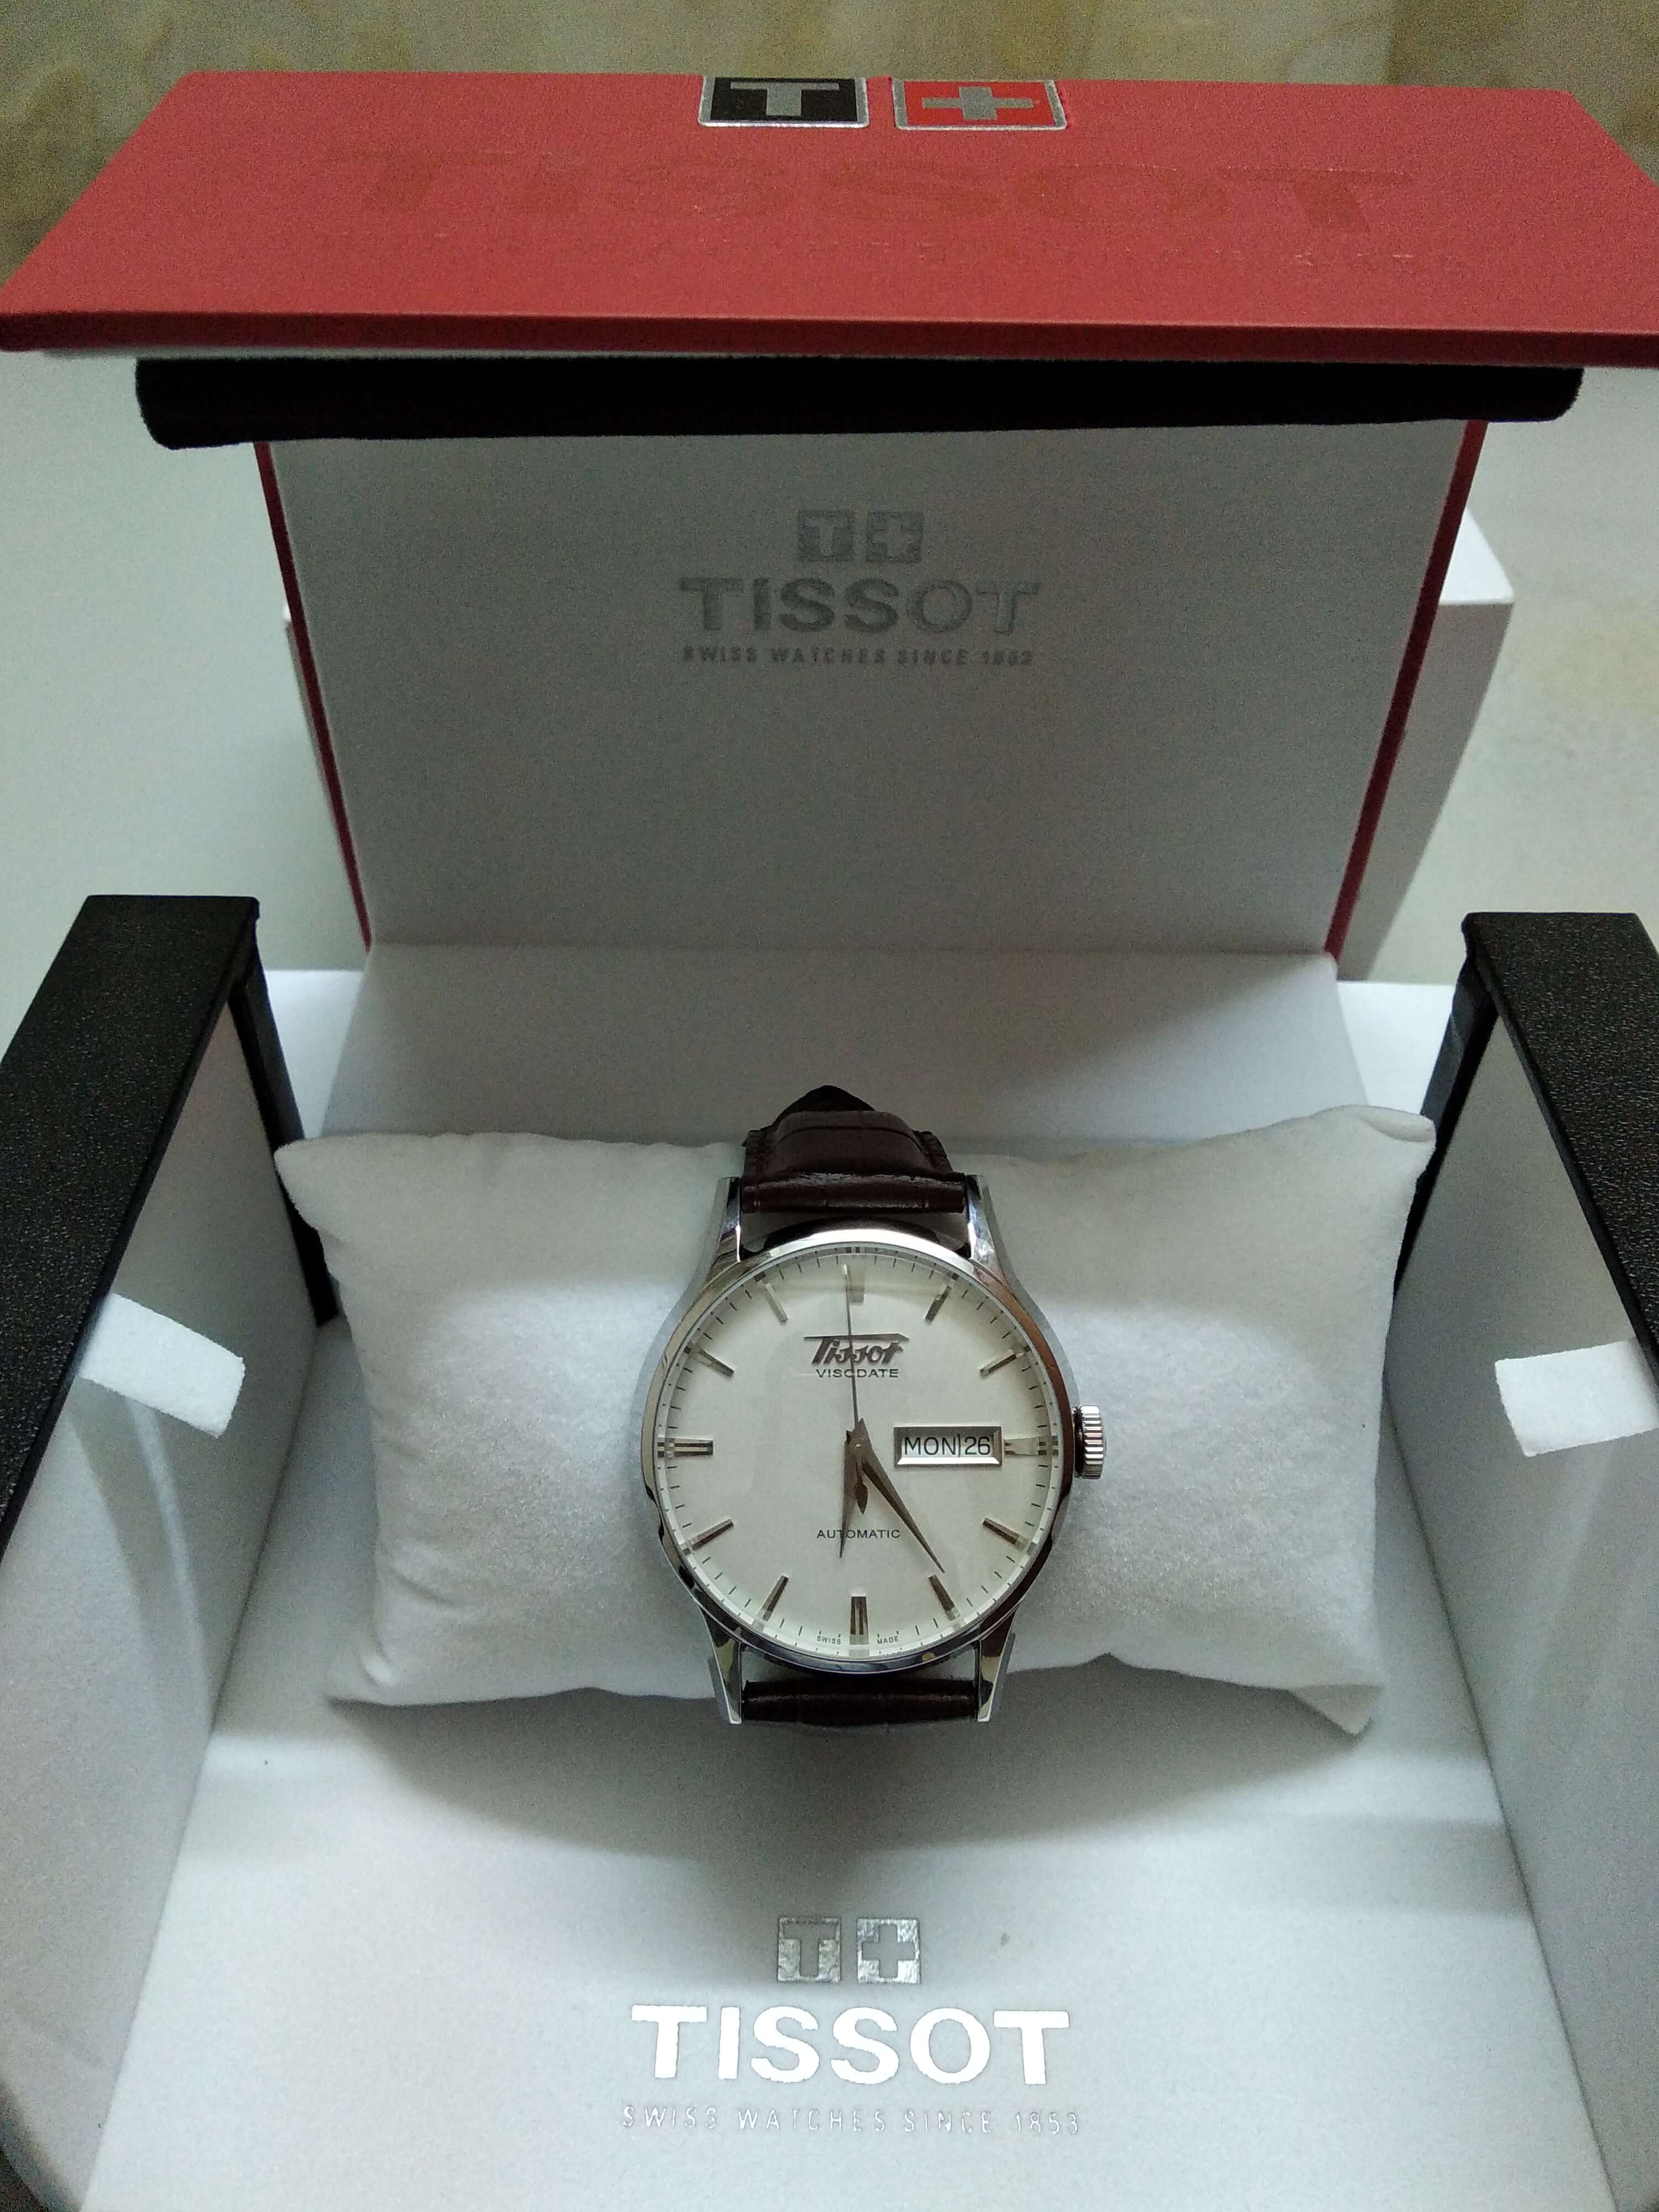 Tissot Visodate watch inside box